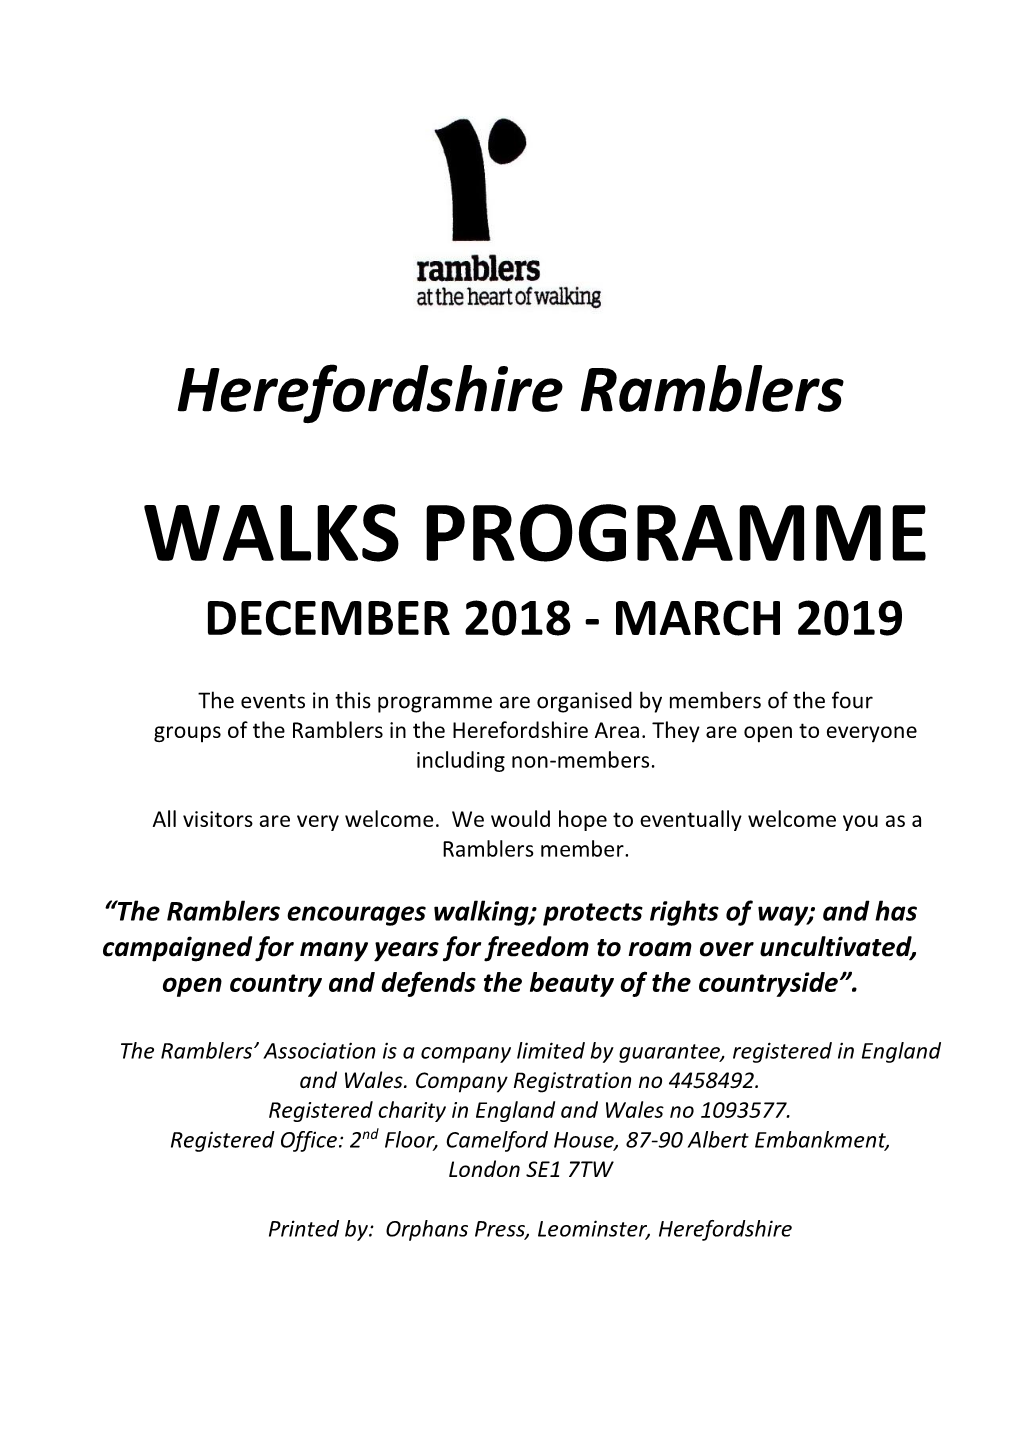 Walks Programme December 2018 - March 2019